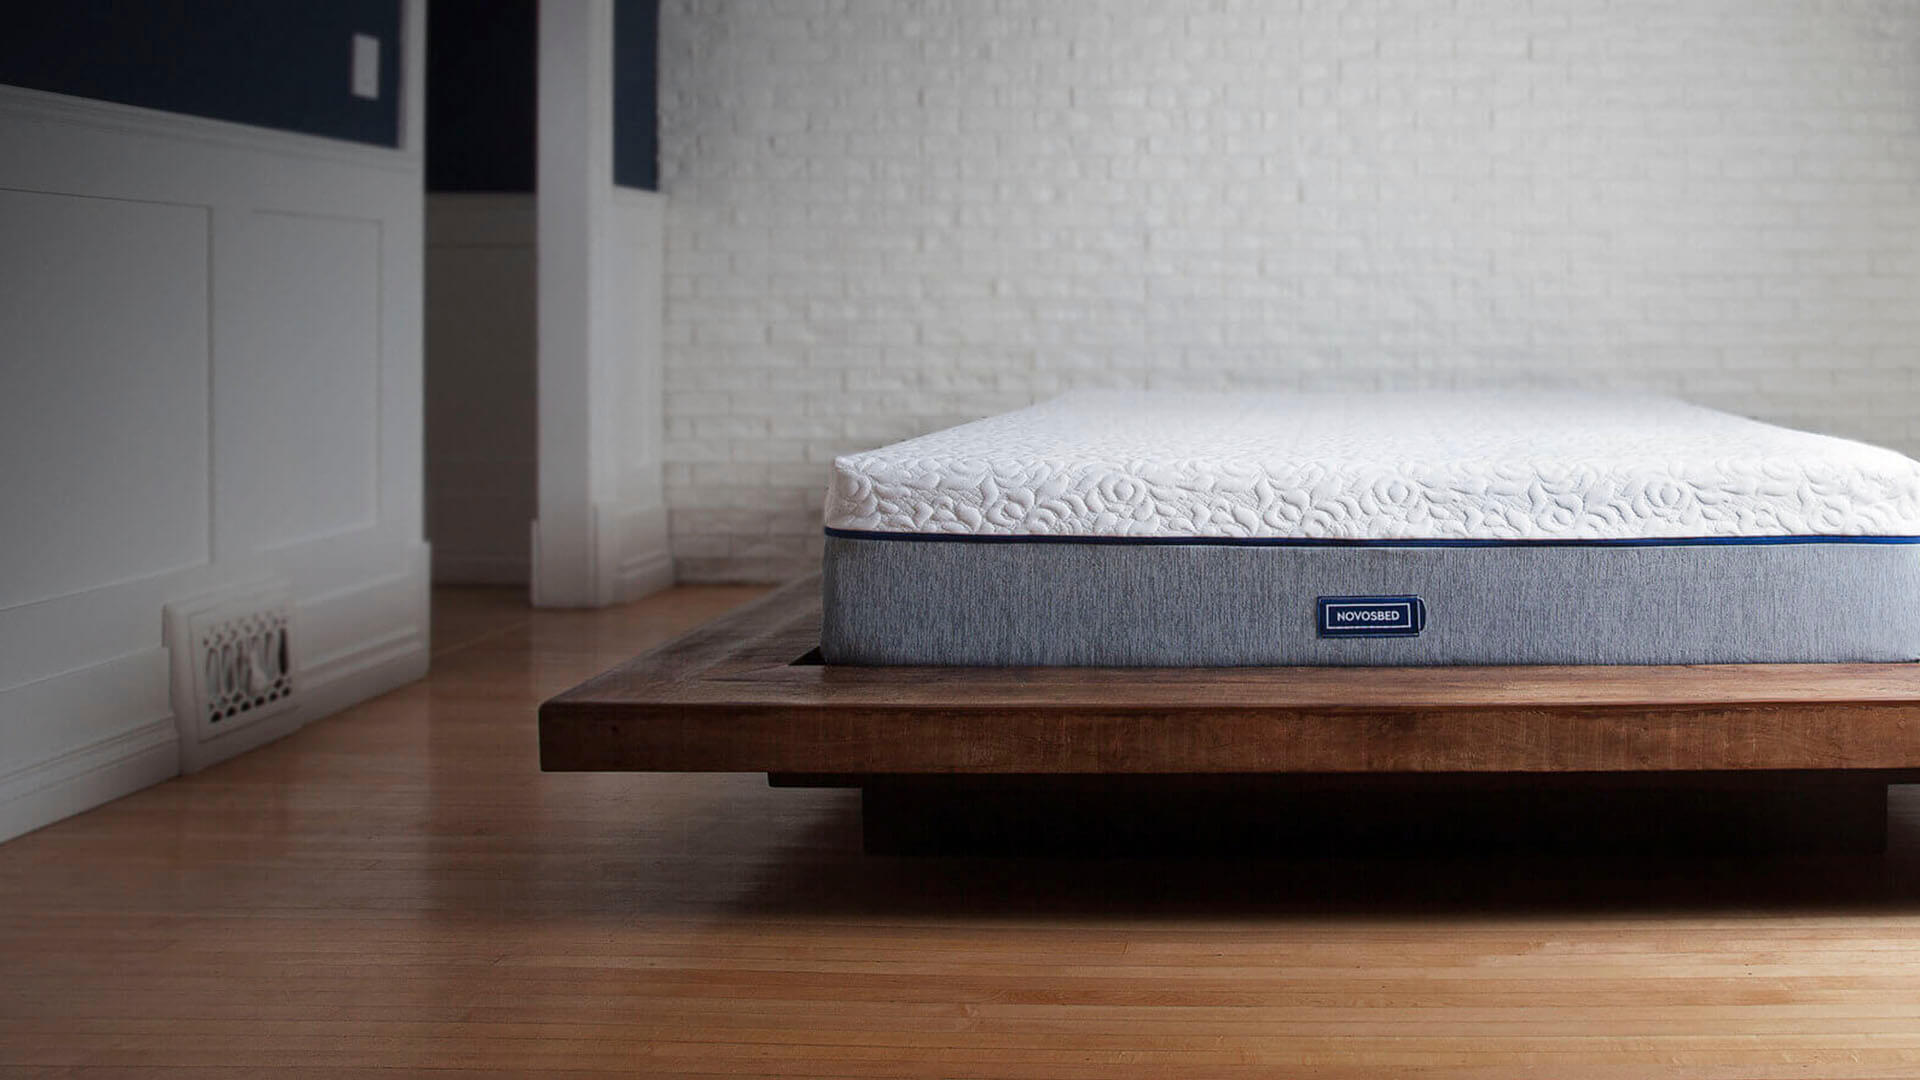 Novosbed premium memory foam mattress resting on a brown platform bed frame in a stylish white brick bedroom